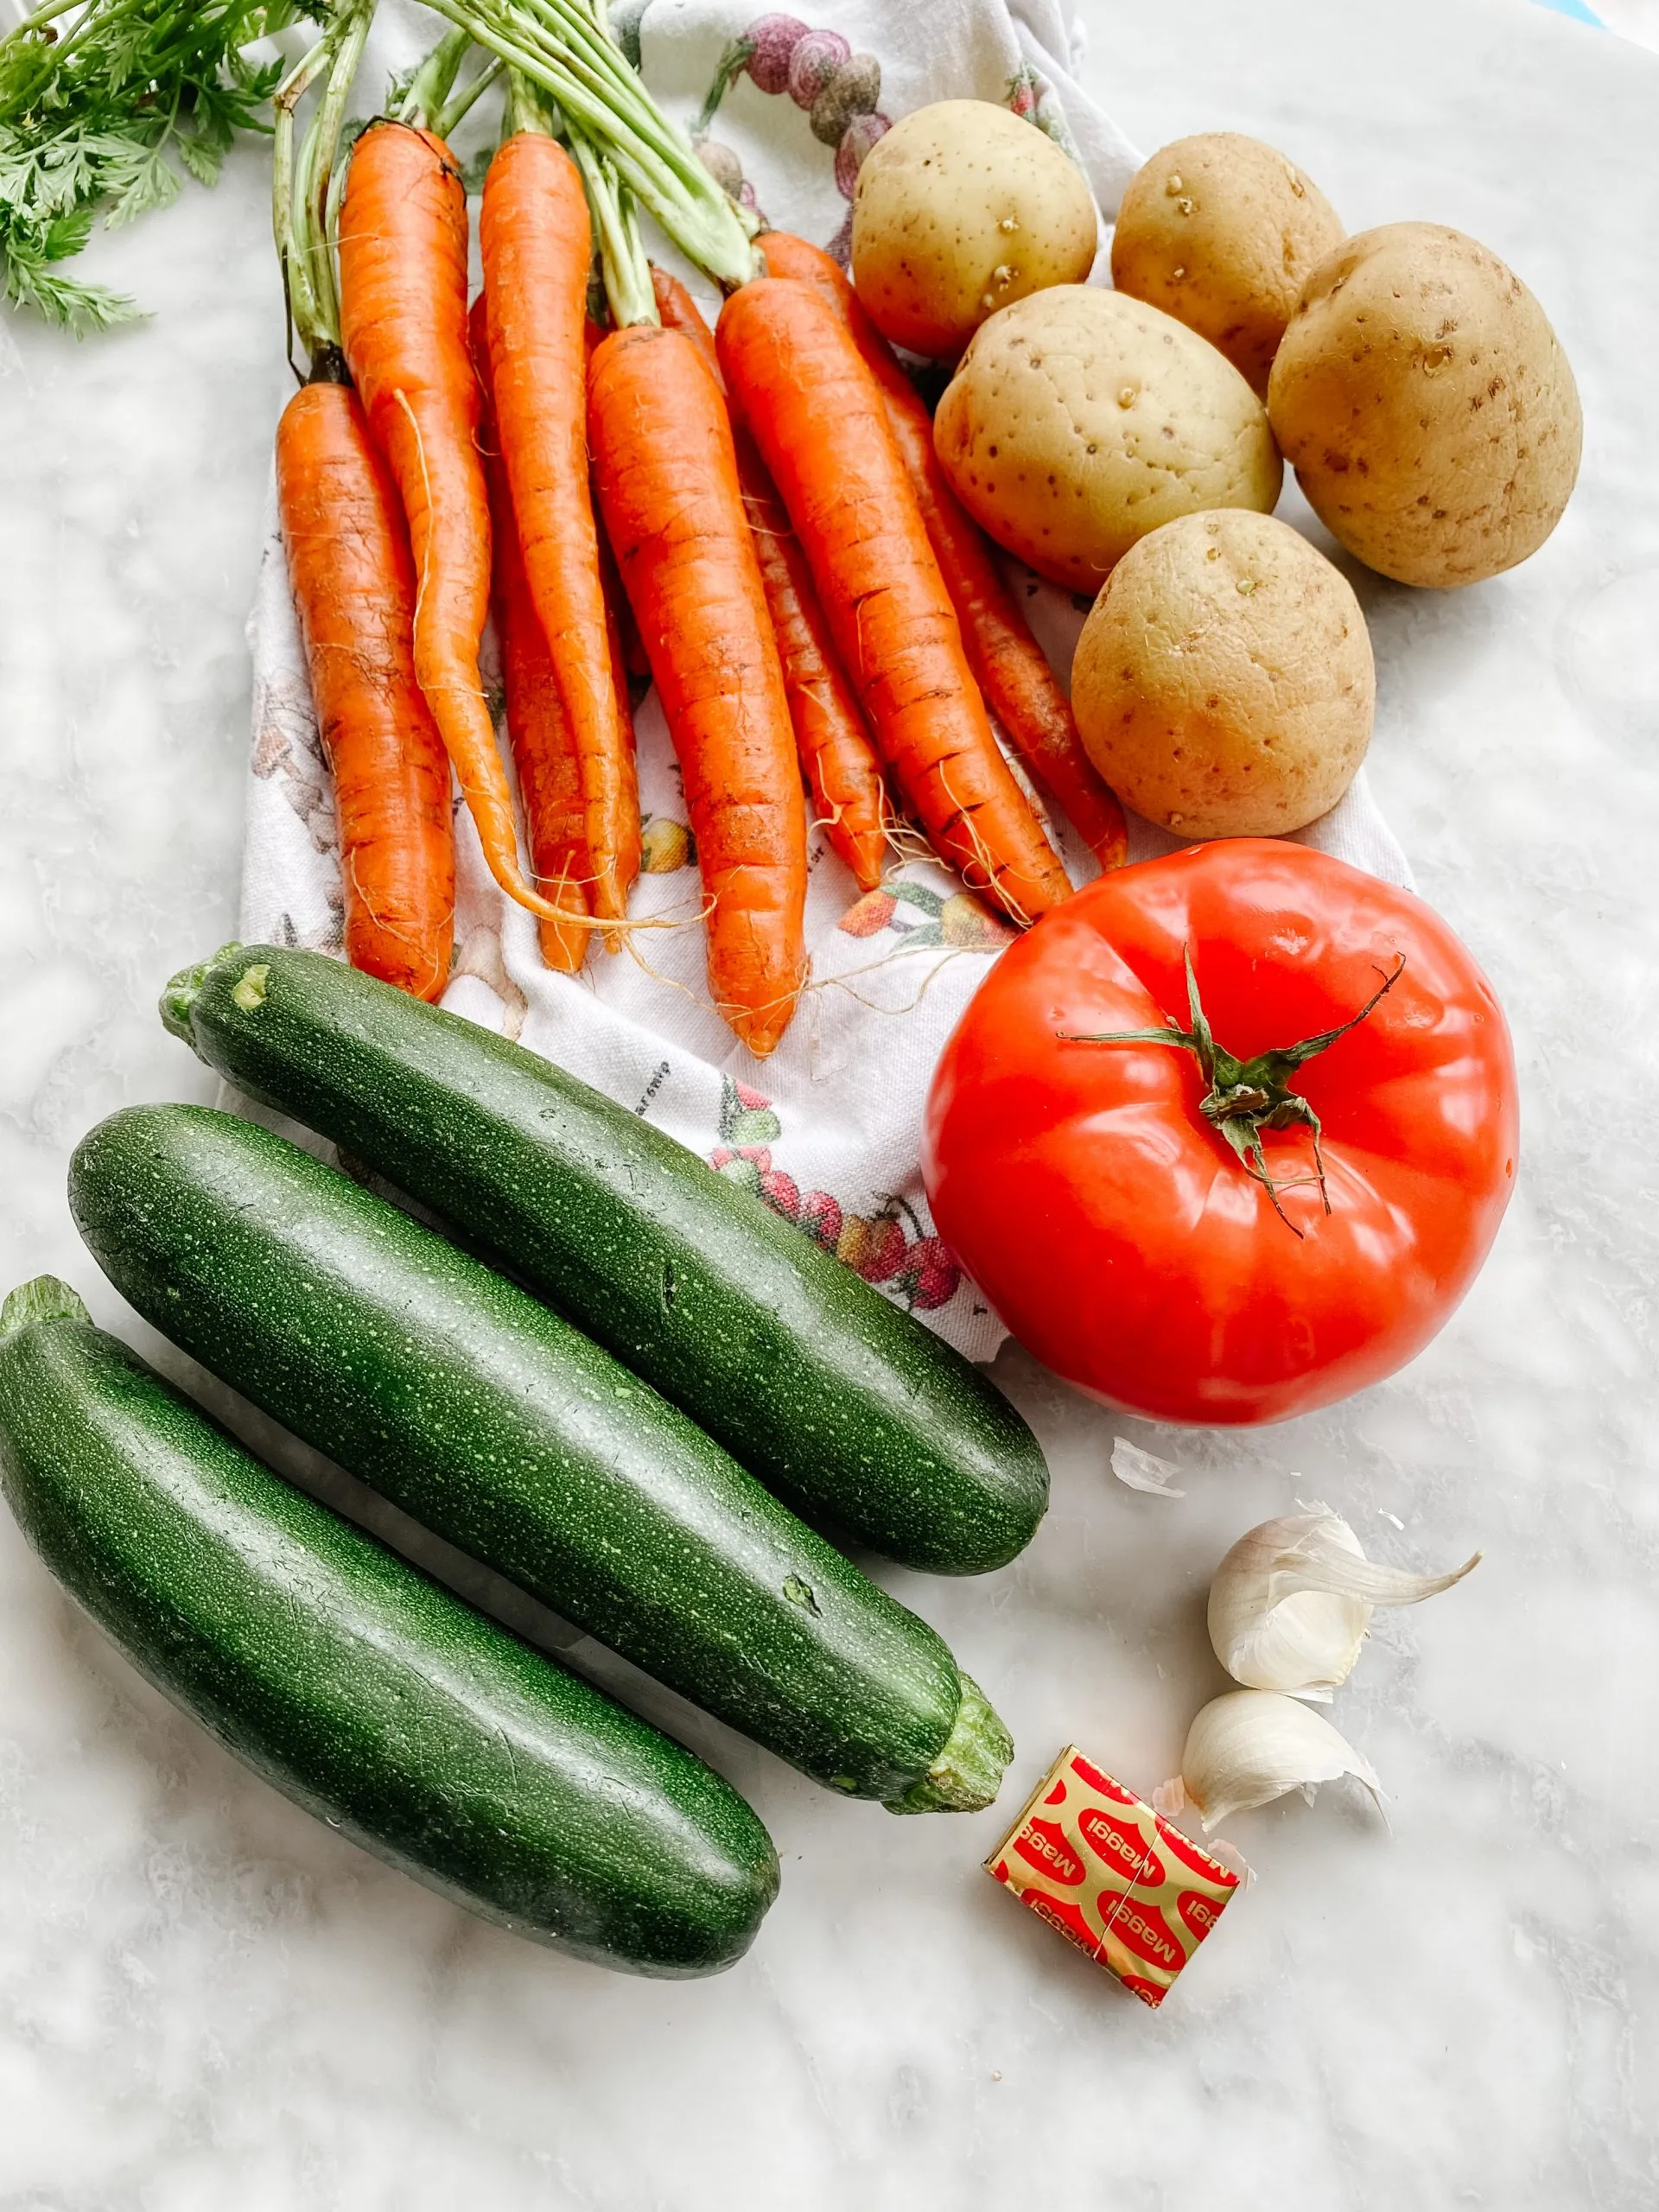 making Potage aux légumes ingredients: tomatoes, zucchini, potatoes, carrots, garlic and bouillon